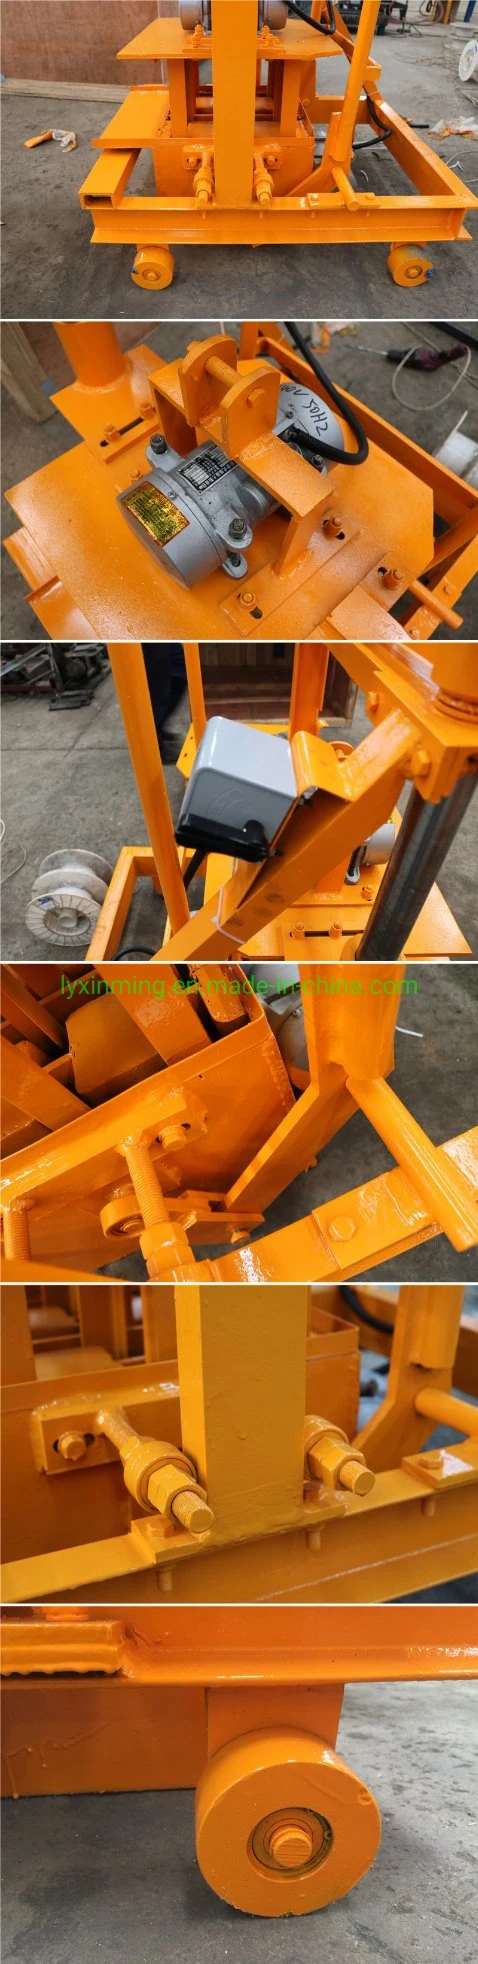 Small Manufacturing Machine Qmr2-45 Concrete Block Machine Mini Construction Brick Machine with Good Price